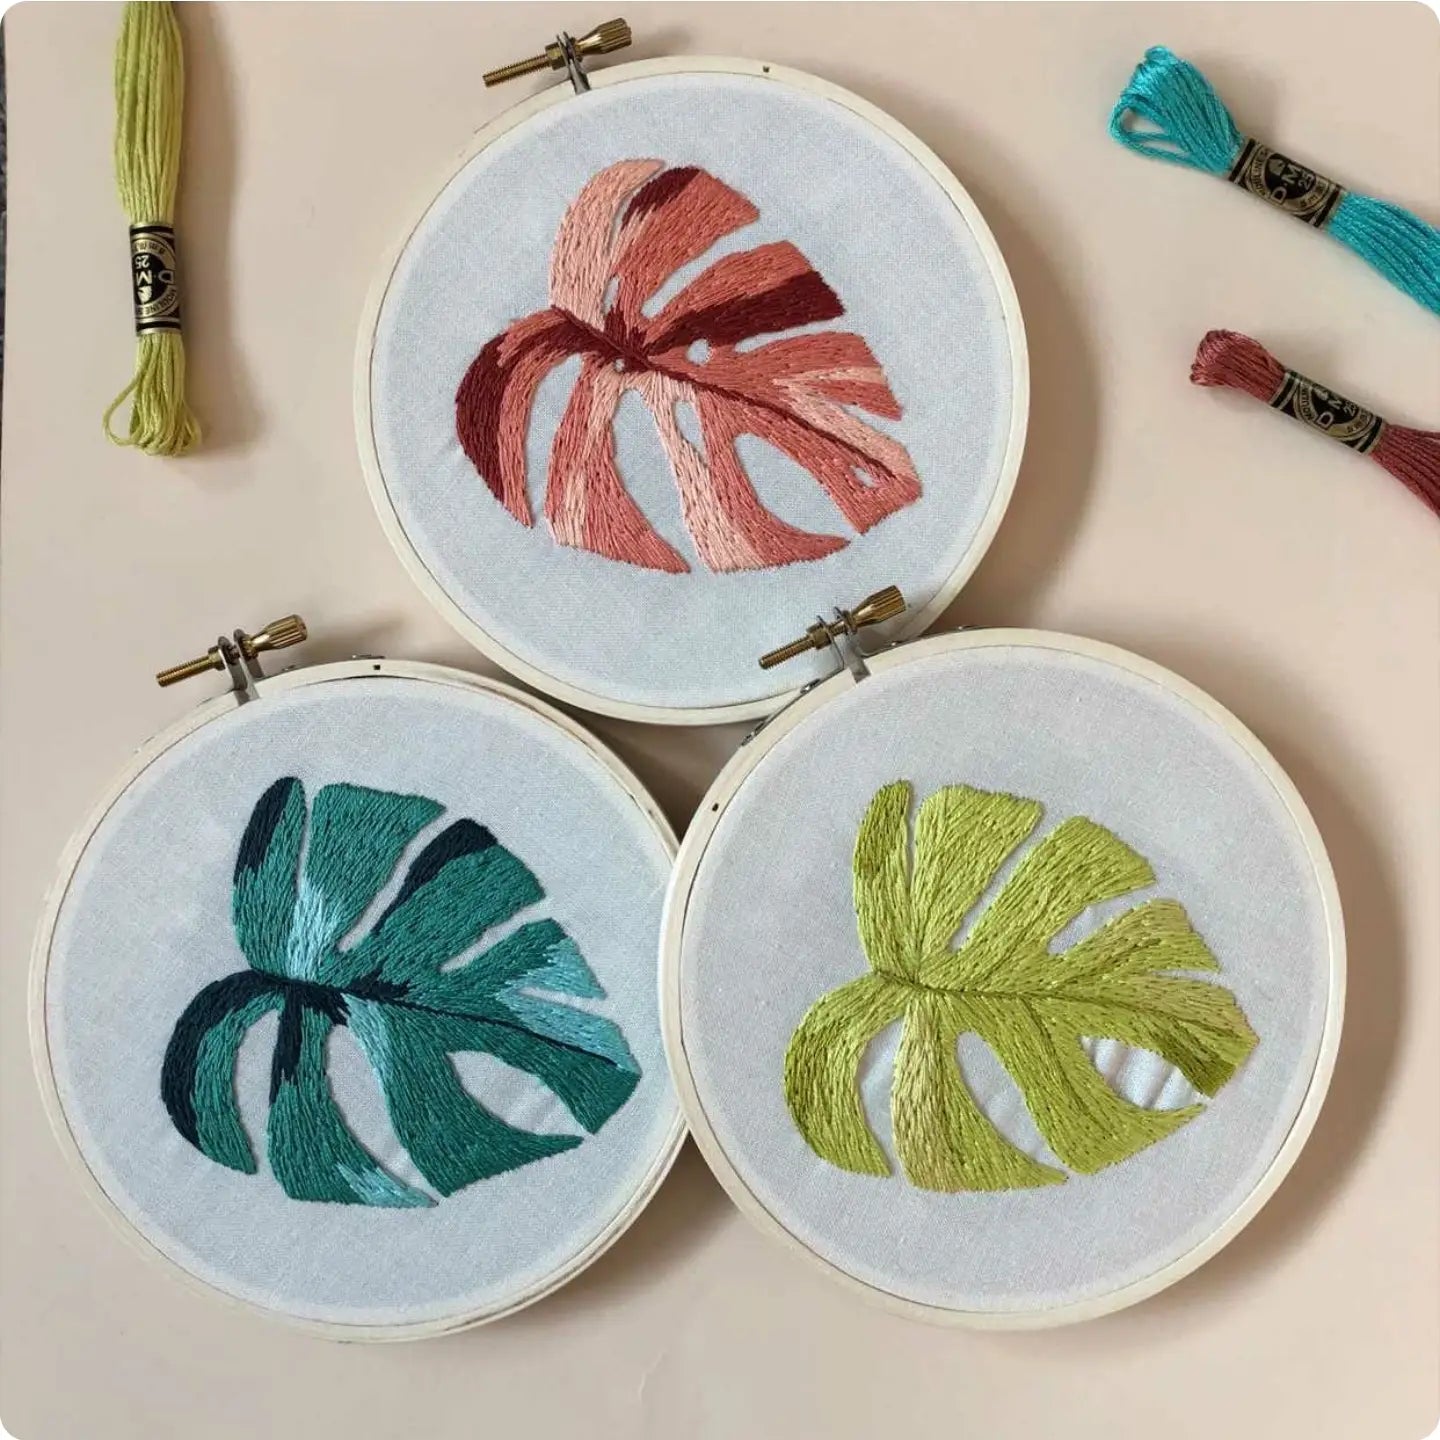 M Creative J Embroidery Kits